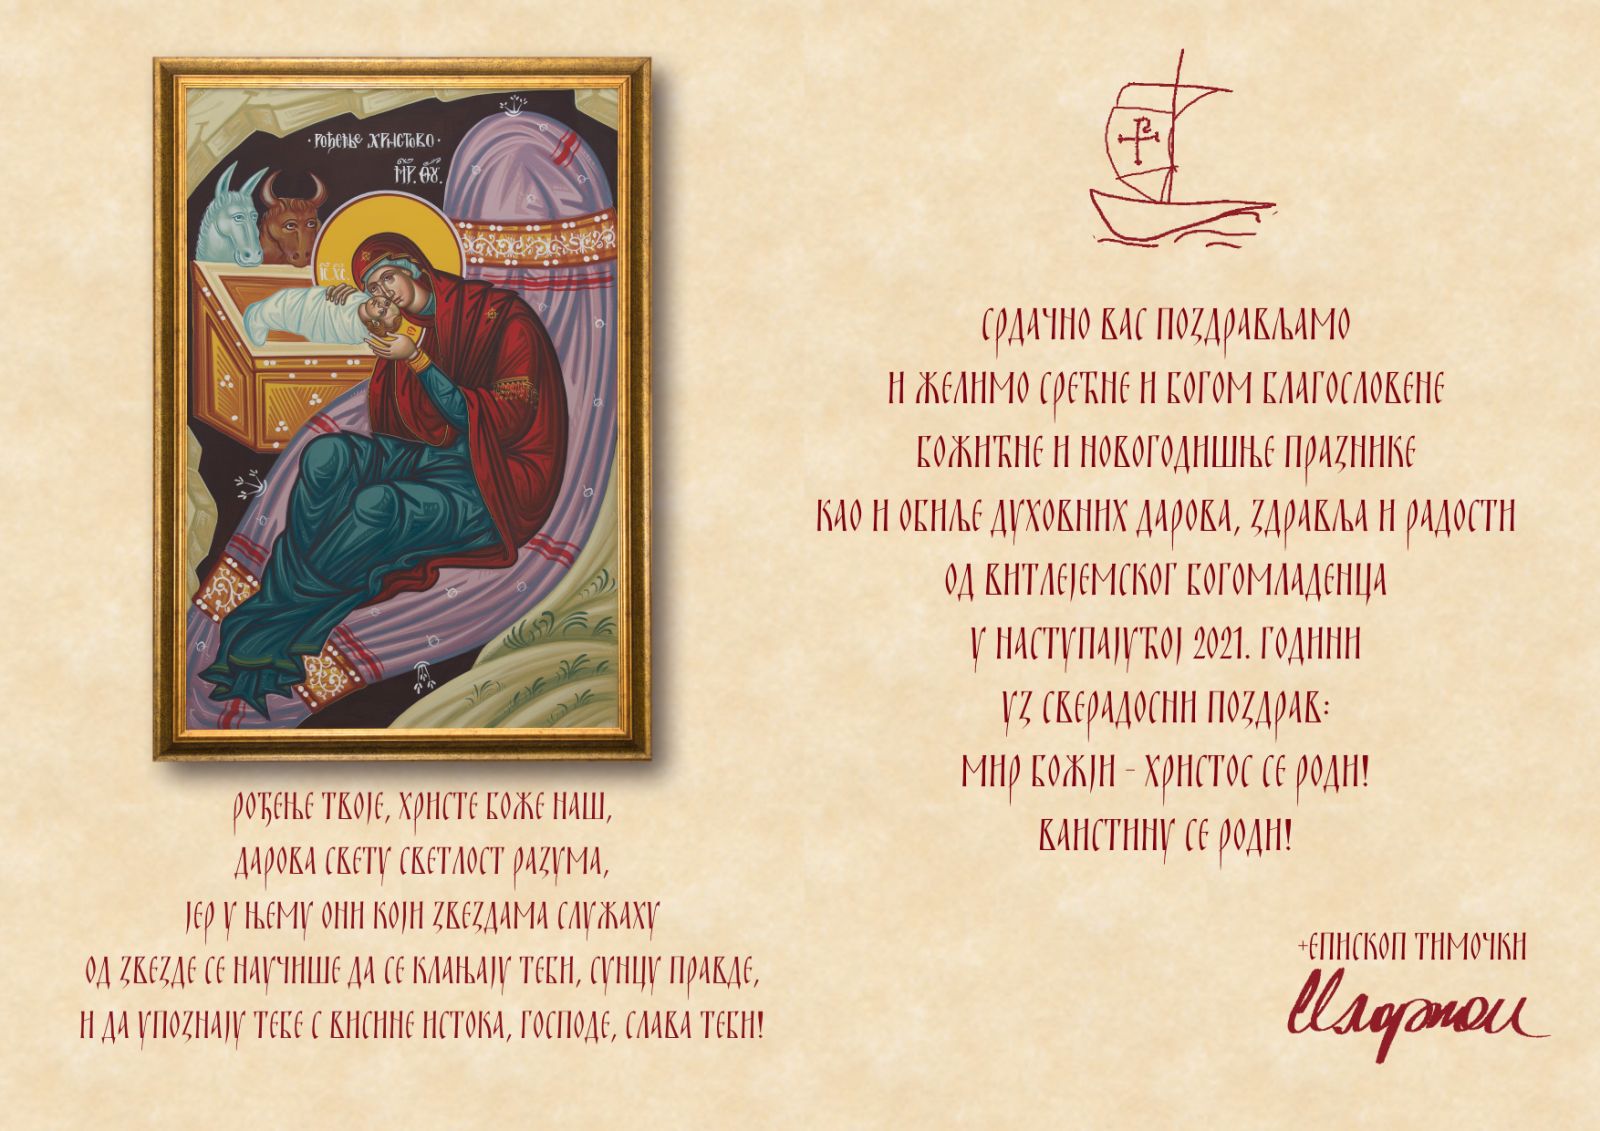 Božićna čestitka Njagovog Preosveštenstva Episkopa timočkog g. Ilariona